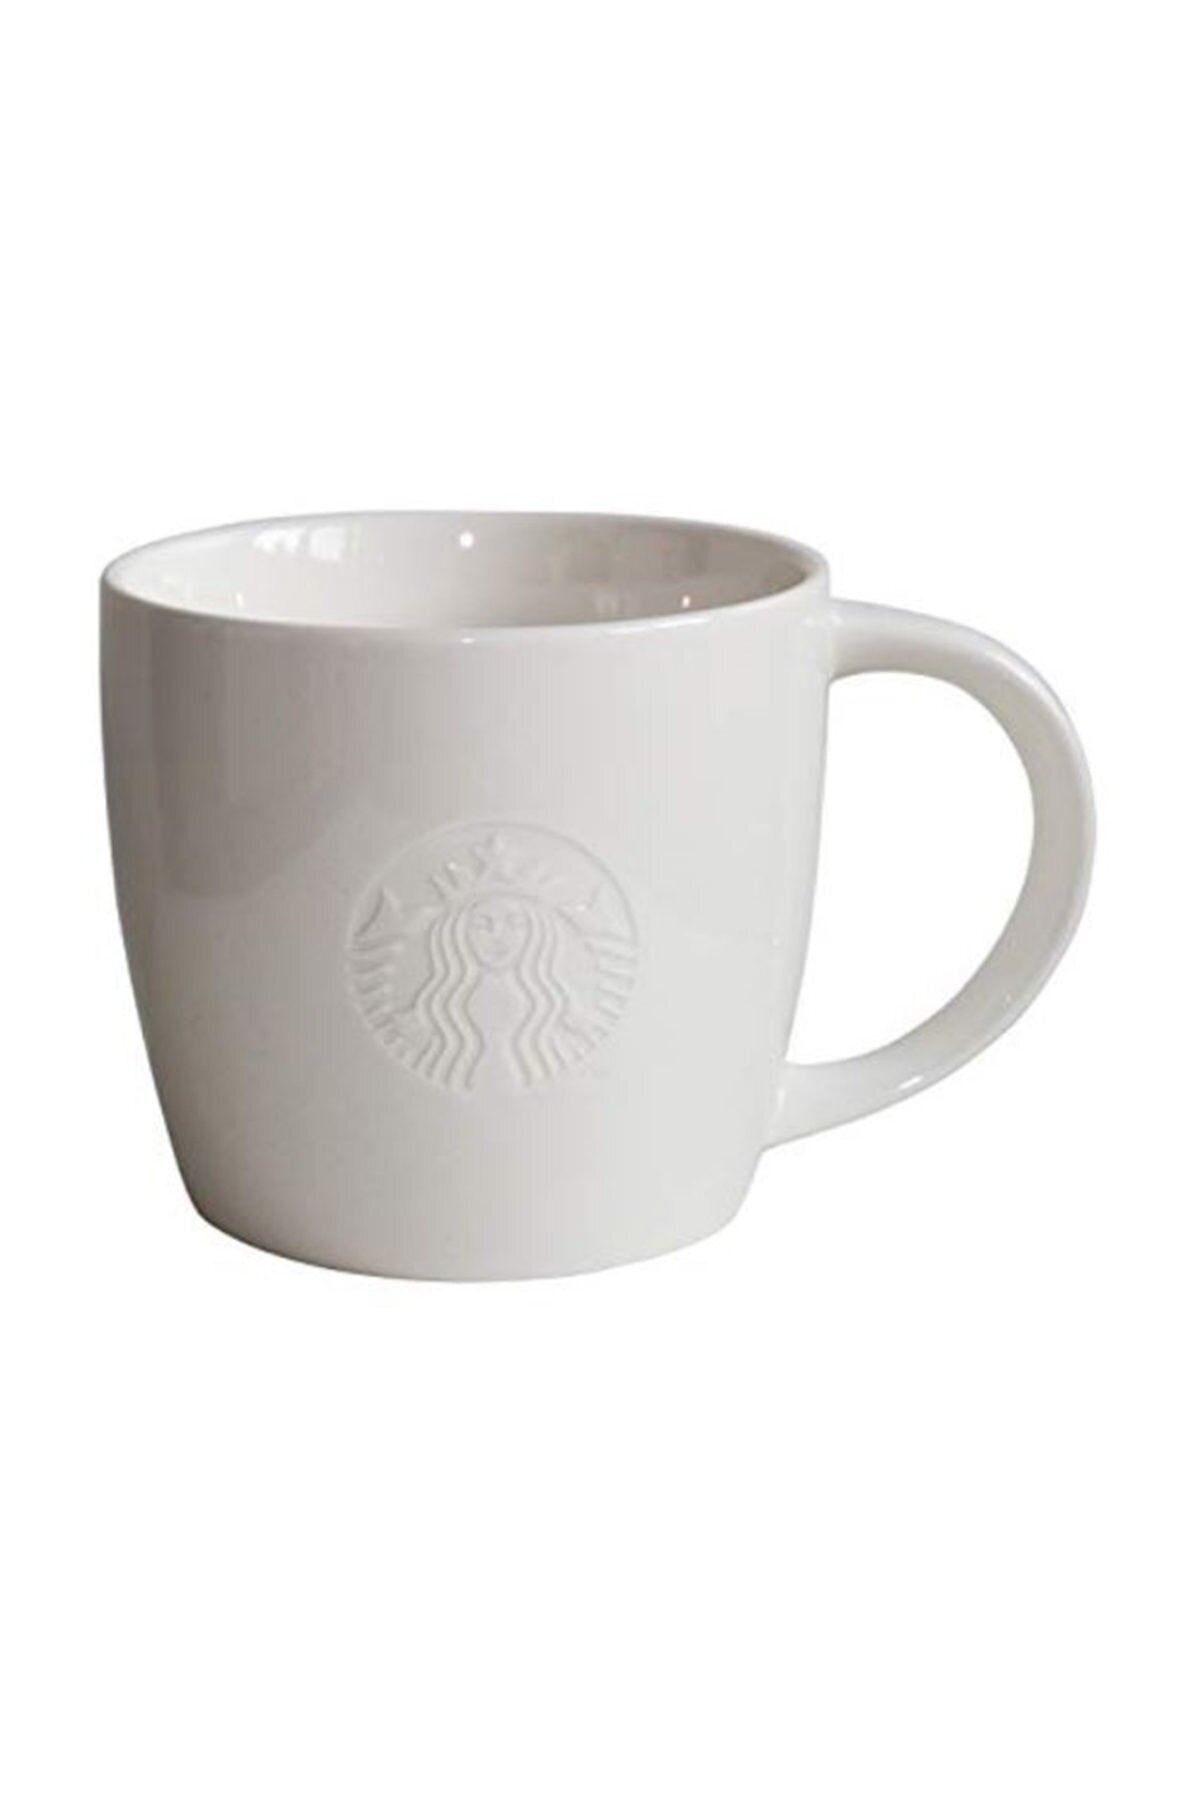 Starbucks ® Klasik Seri Kupa Mug Beyaz 355 Ml Tall Boy 12 Oz